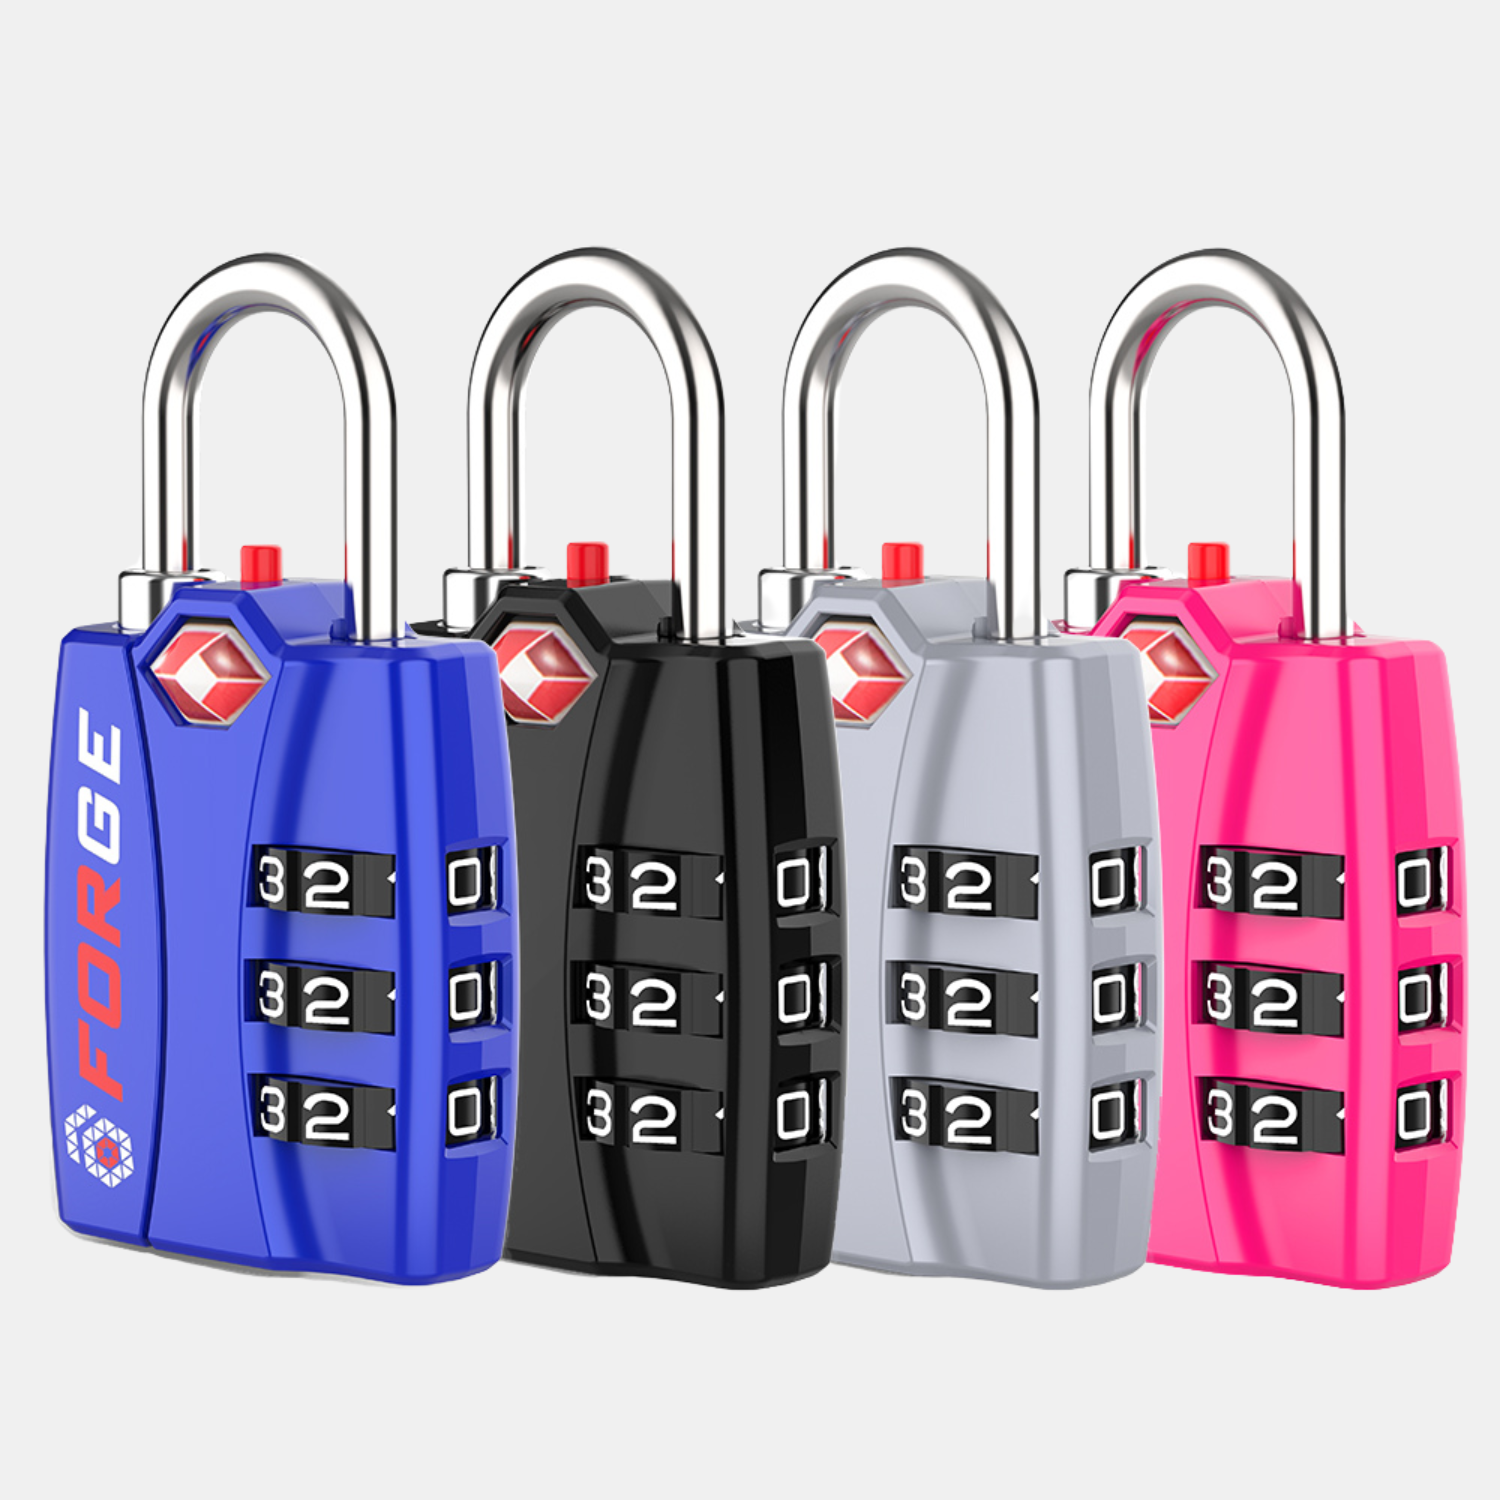 TSA-Approved Luggage Locks: 3-Digit Combination, Open Alert Indicator, 4 Color Locks #2